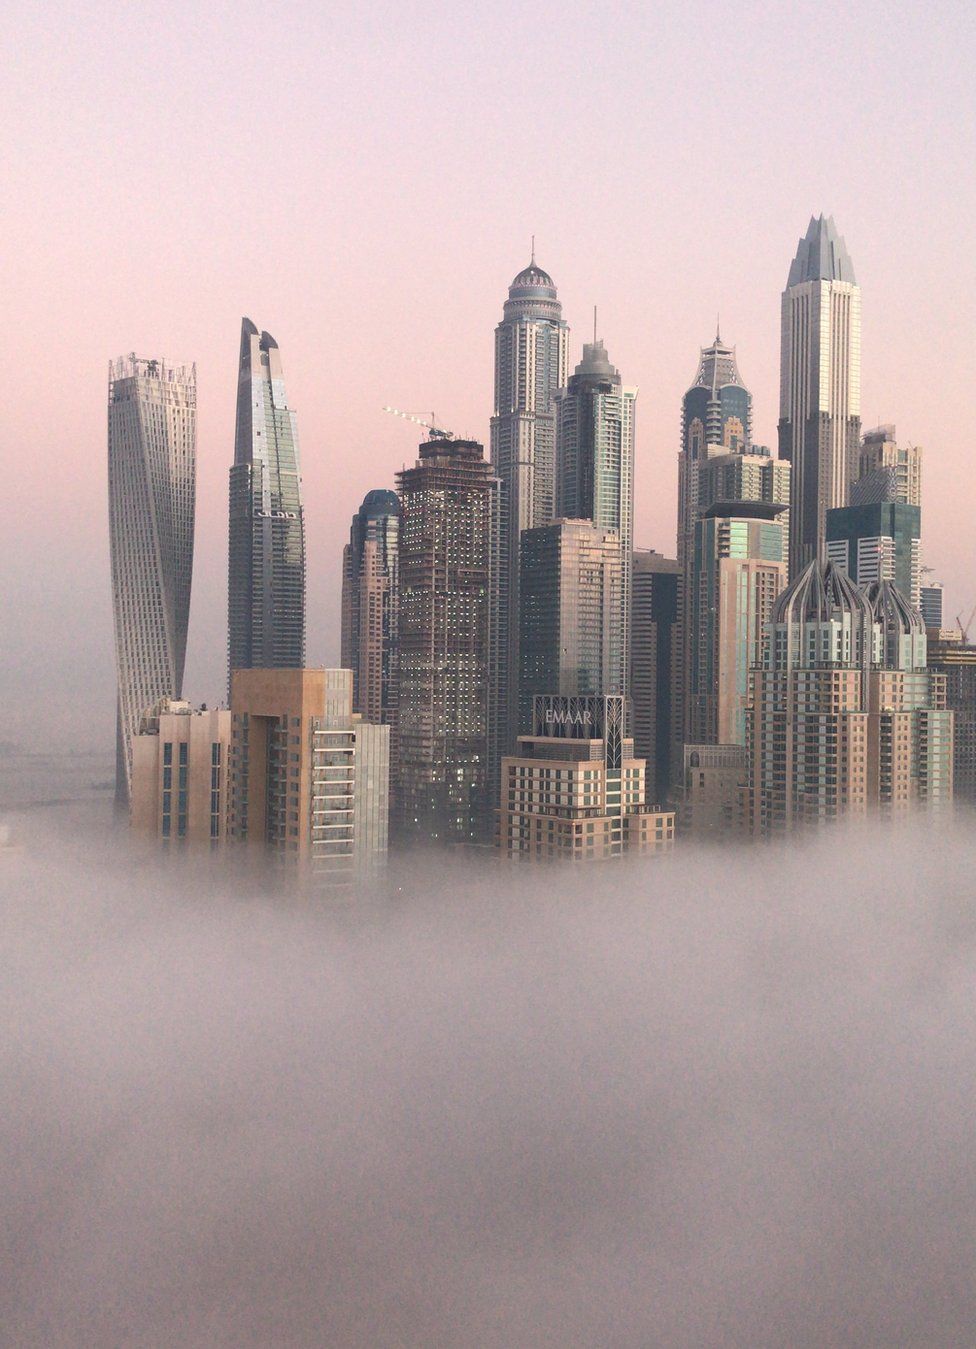 Skyscrapers in Dubai amongst the mist